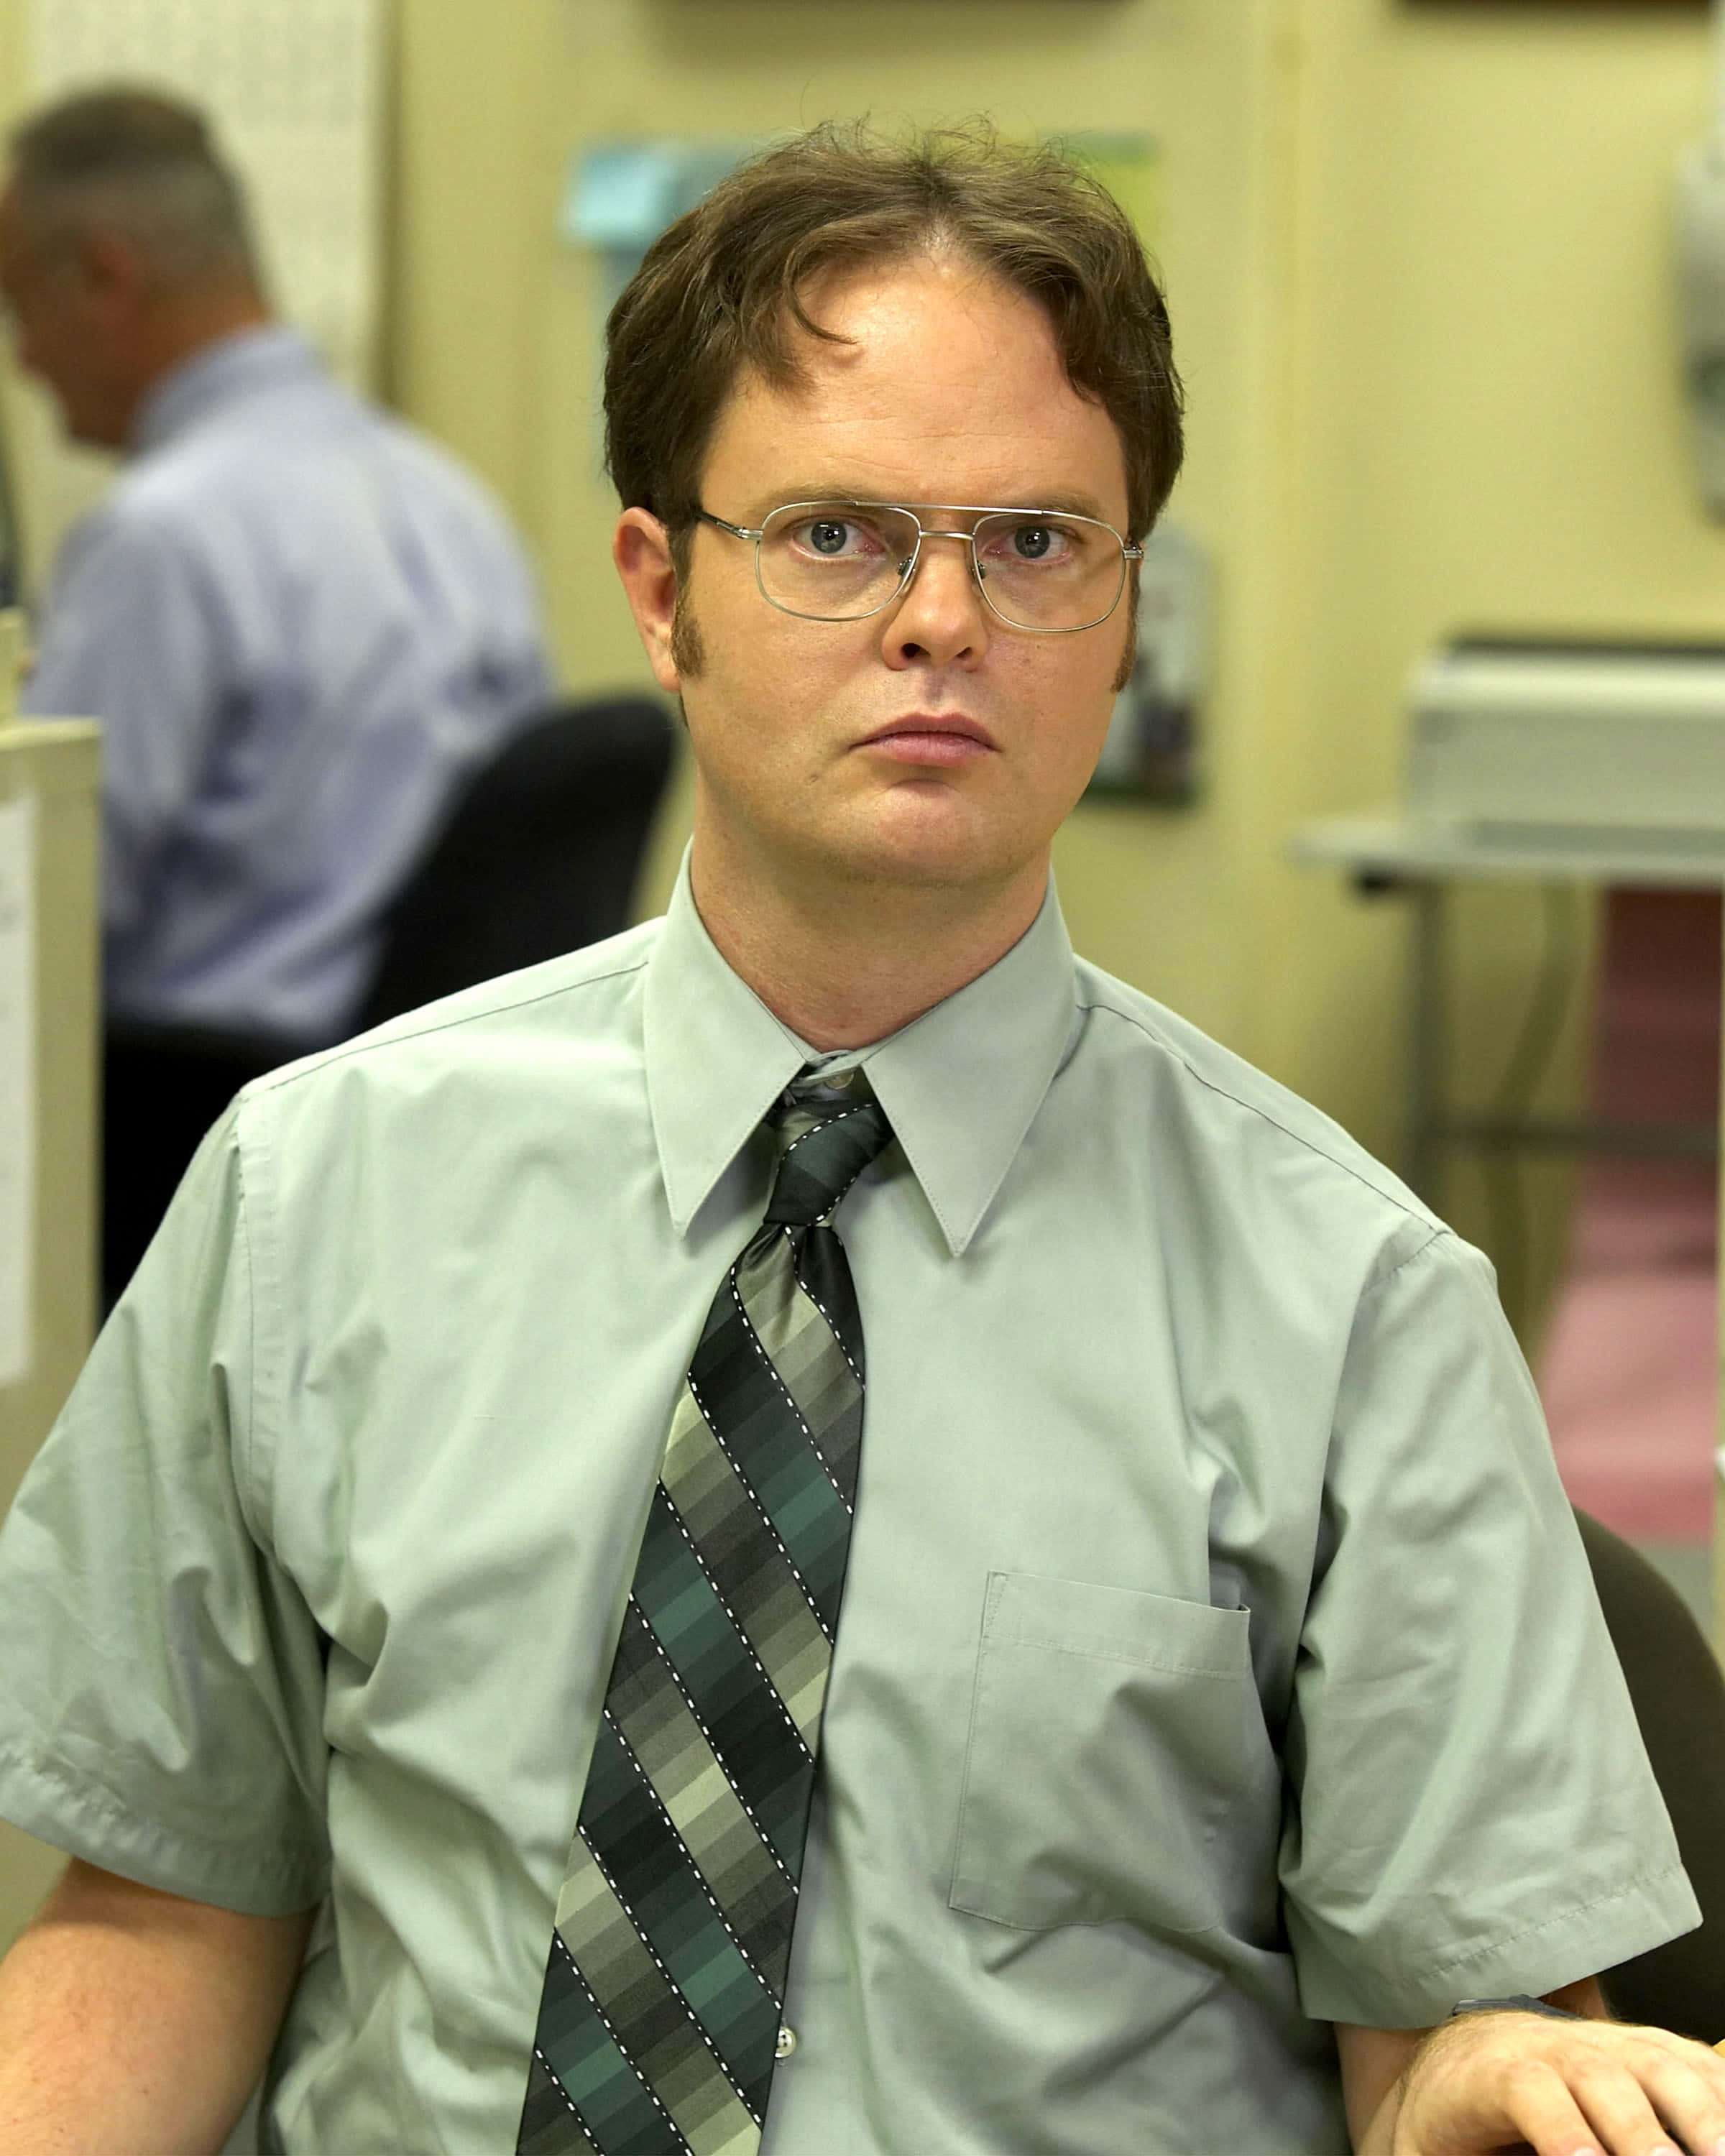 Rainn Wilson stars as Dwight Schrute in "The Office" Wallpaper